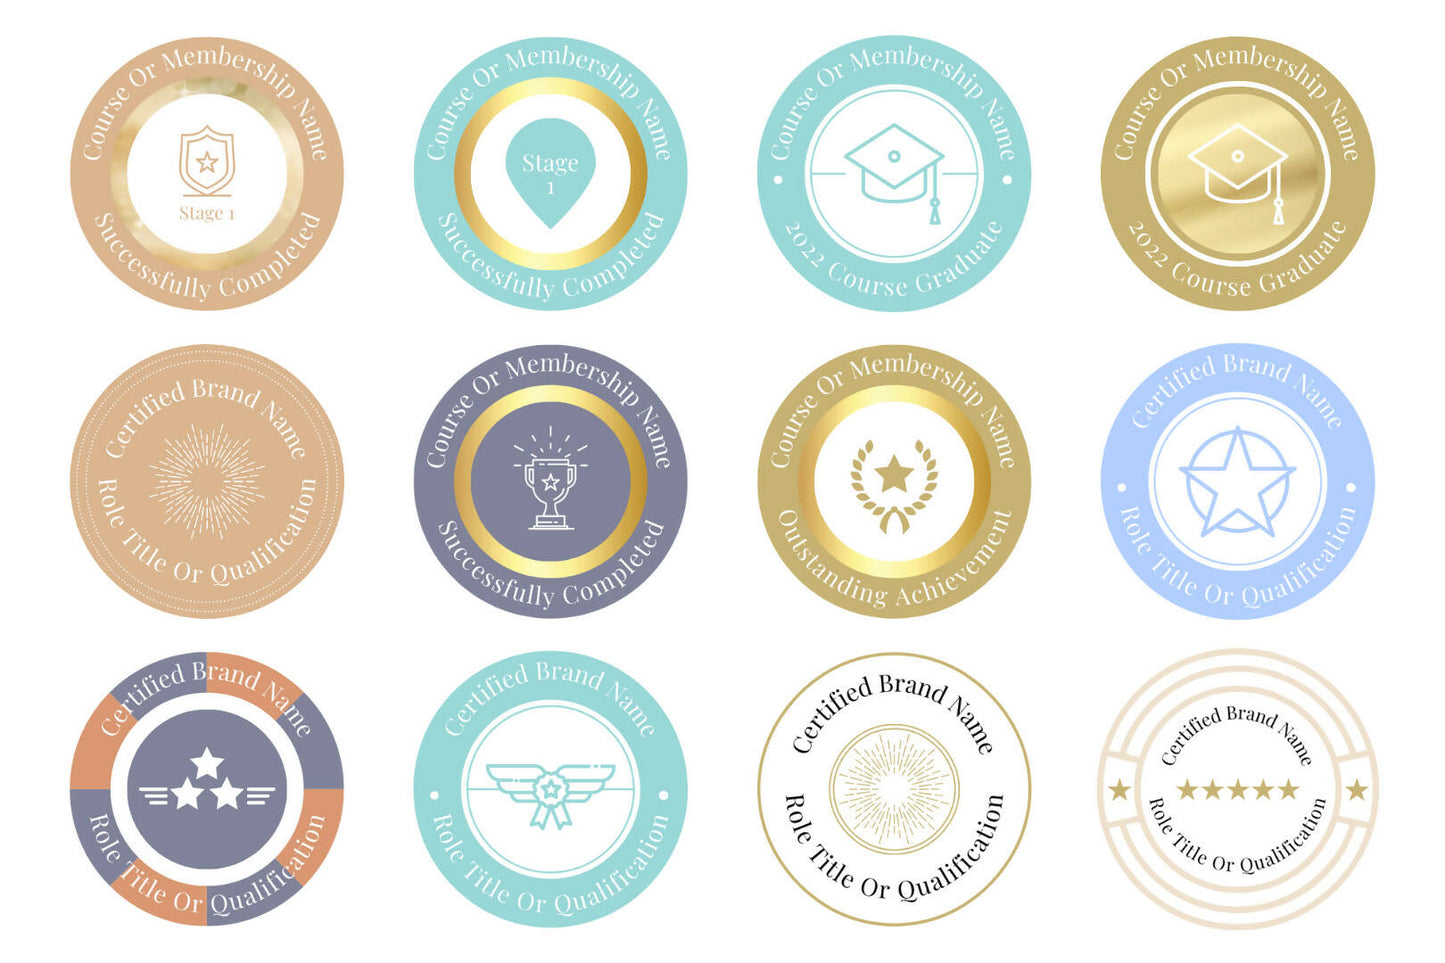 Achievement & Certification Badges Canva Template Pack